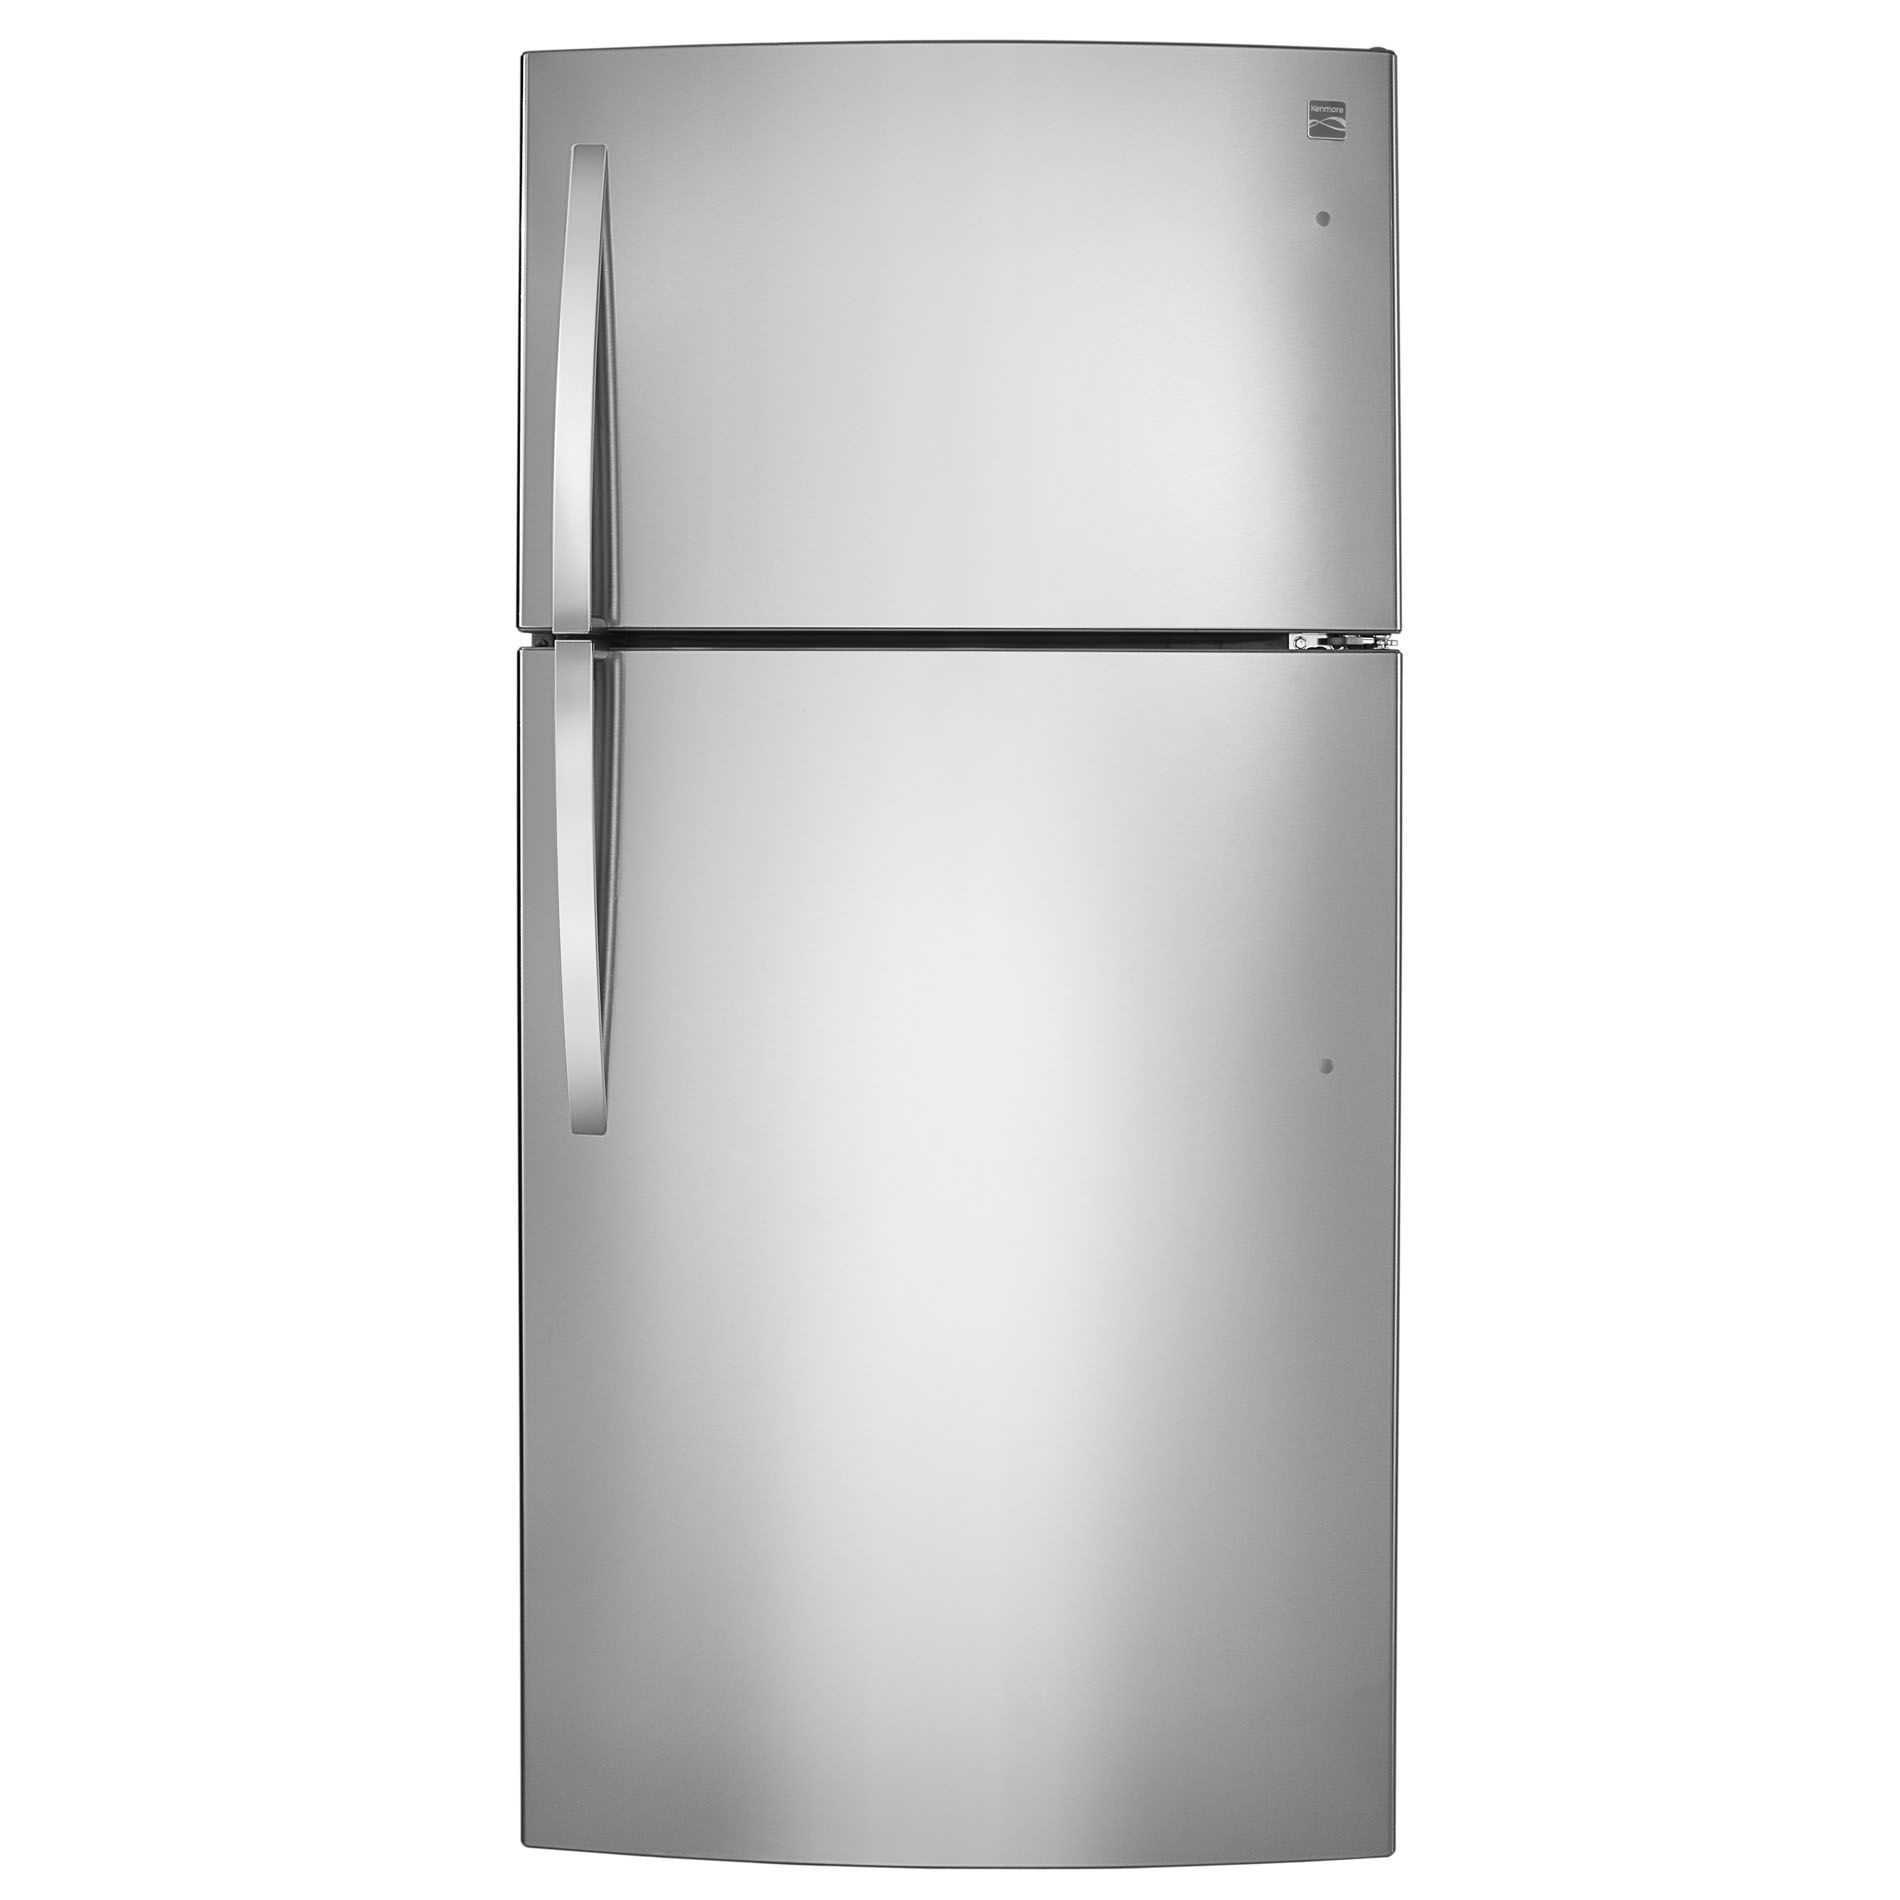 Kenmore 24 cu. ft. Top-Freezer Refrigerator w/ Internal Water Dispenser - Stainless Steel